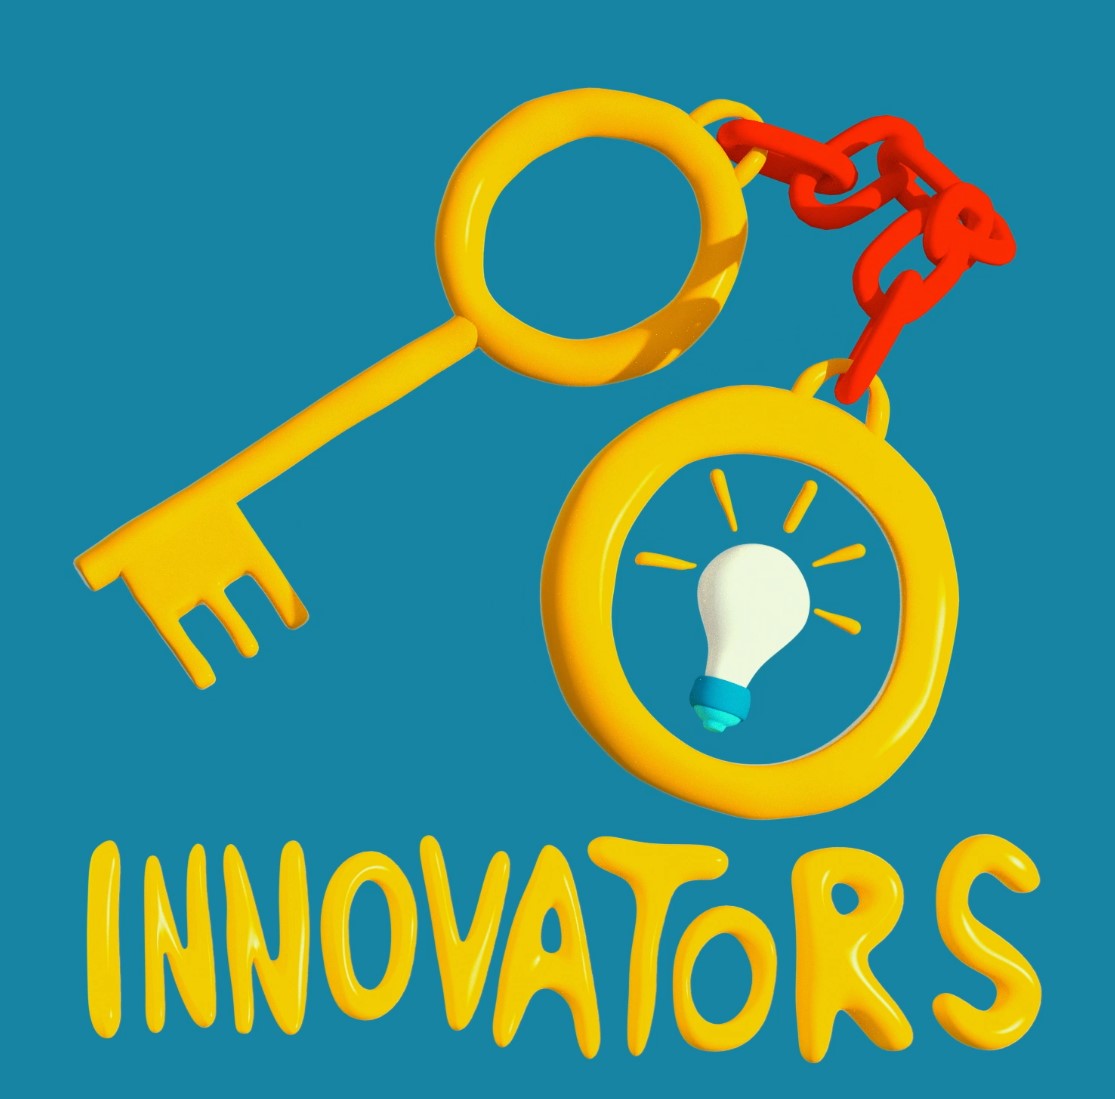 The Innovators Key #398